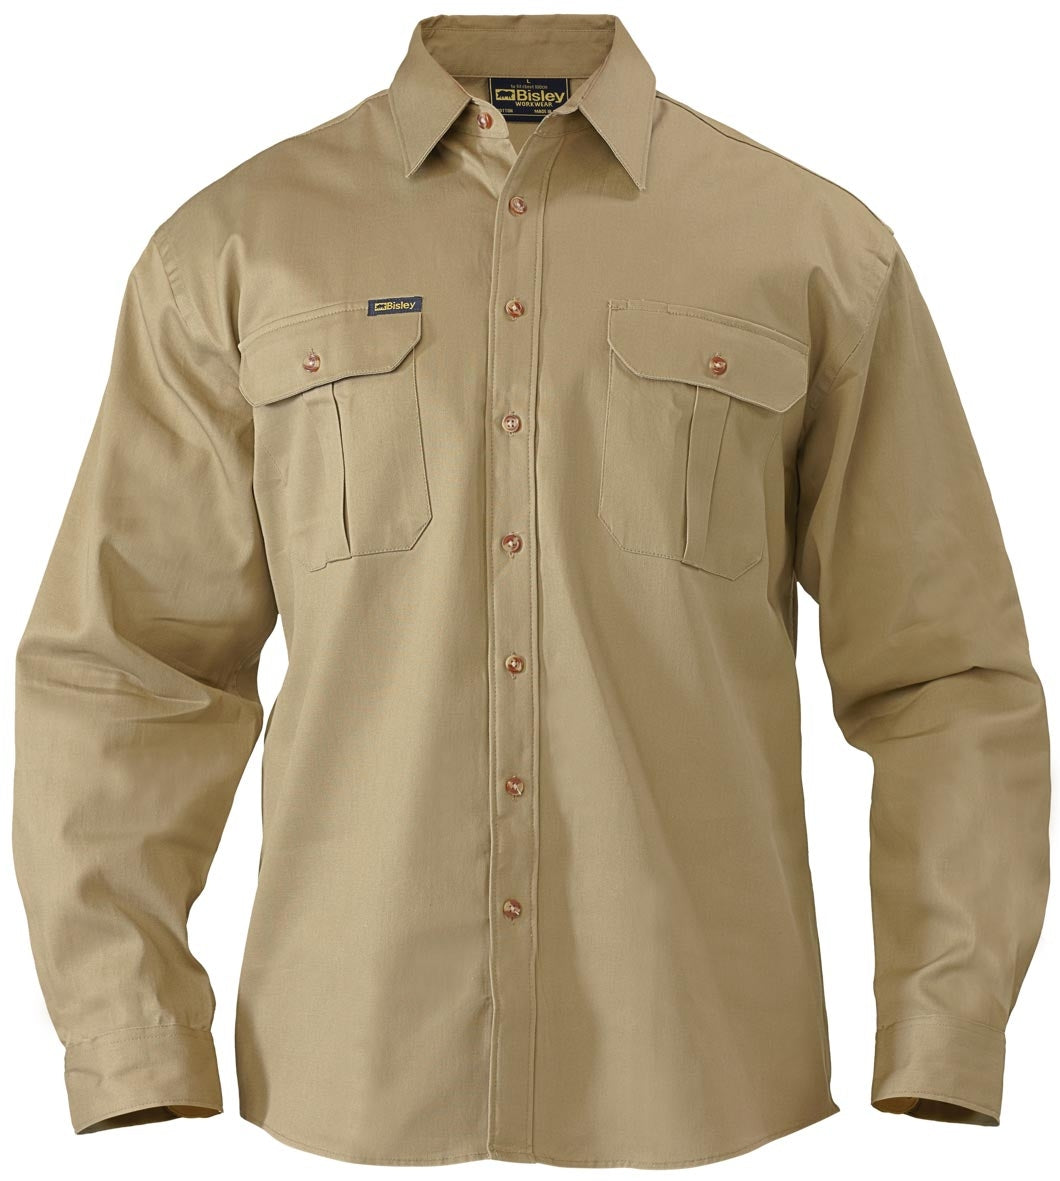 Bisley Original Cotton Drill Work Shirt - Long Sleeve S Khaki Workwear by Bisley | The Bloke Shop